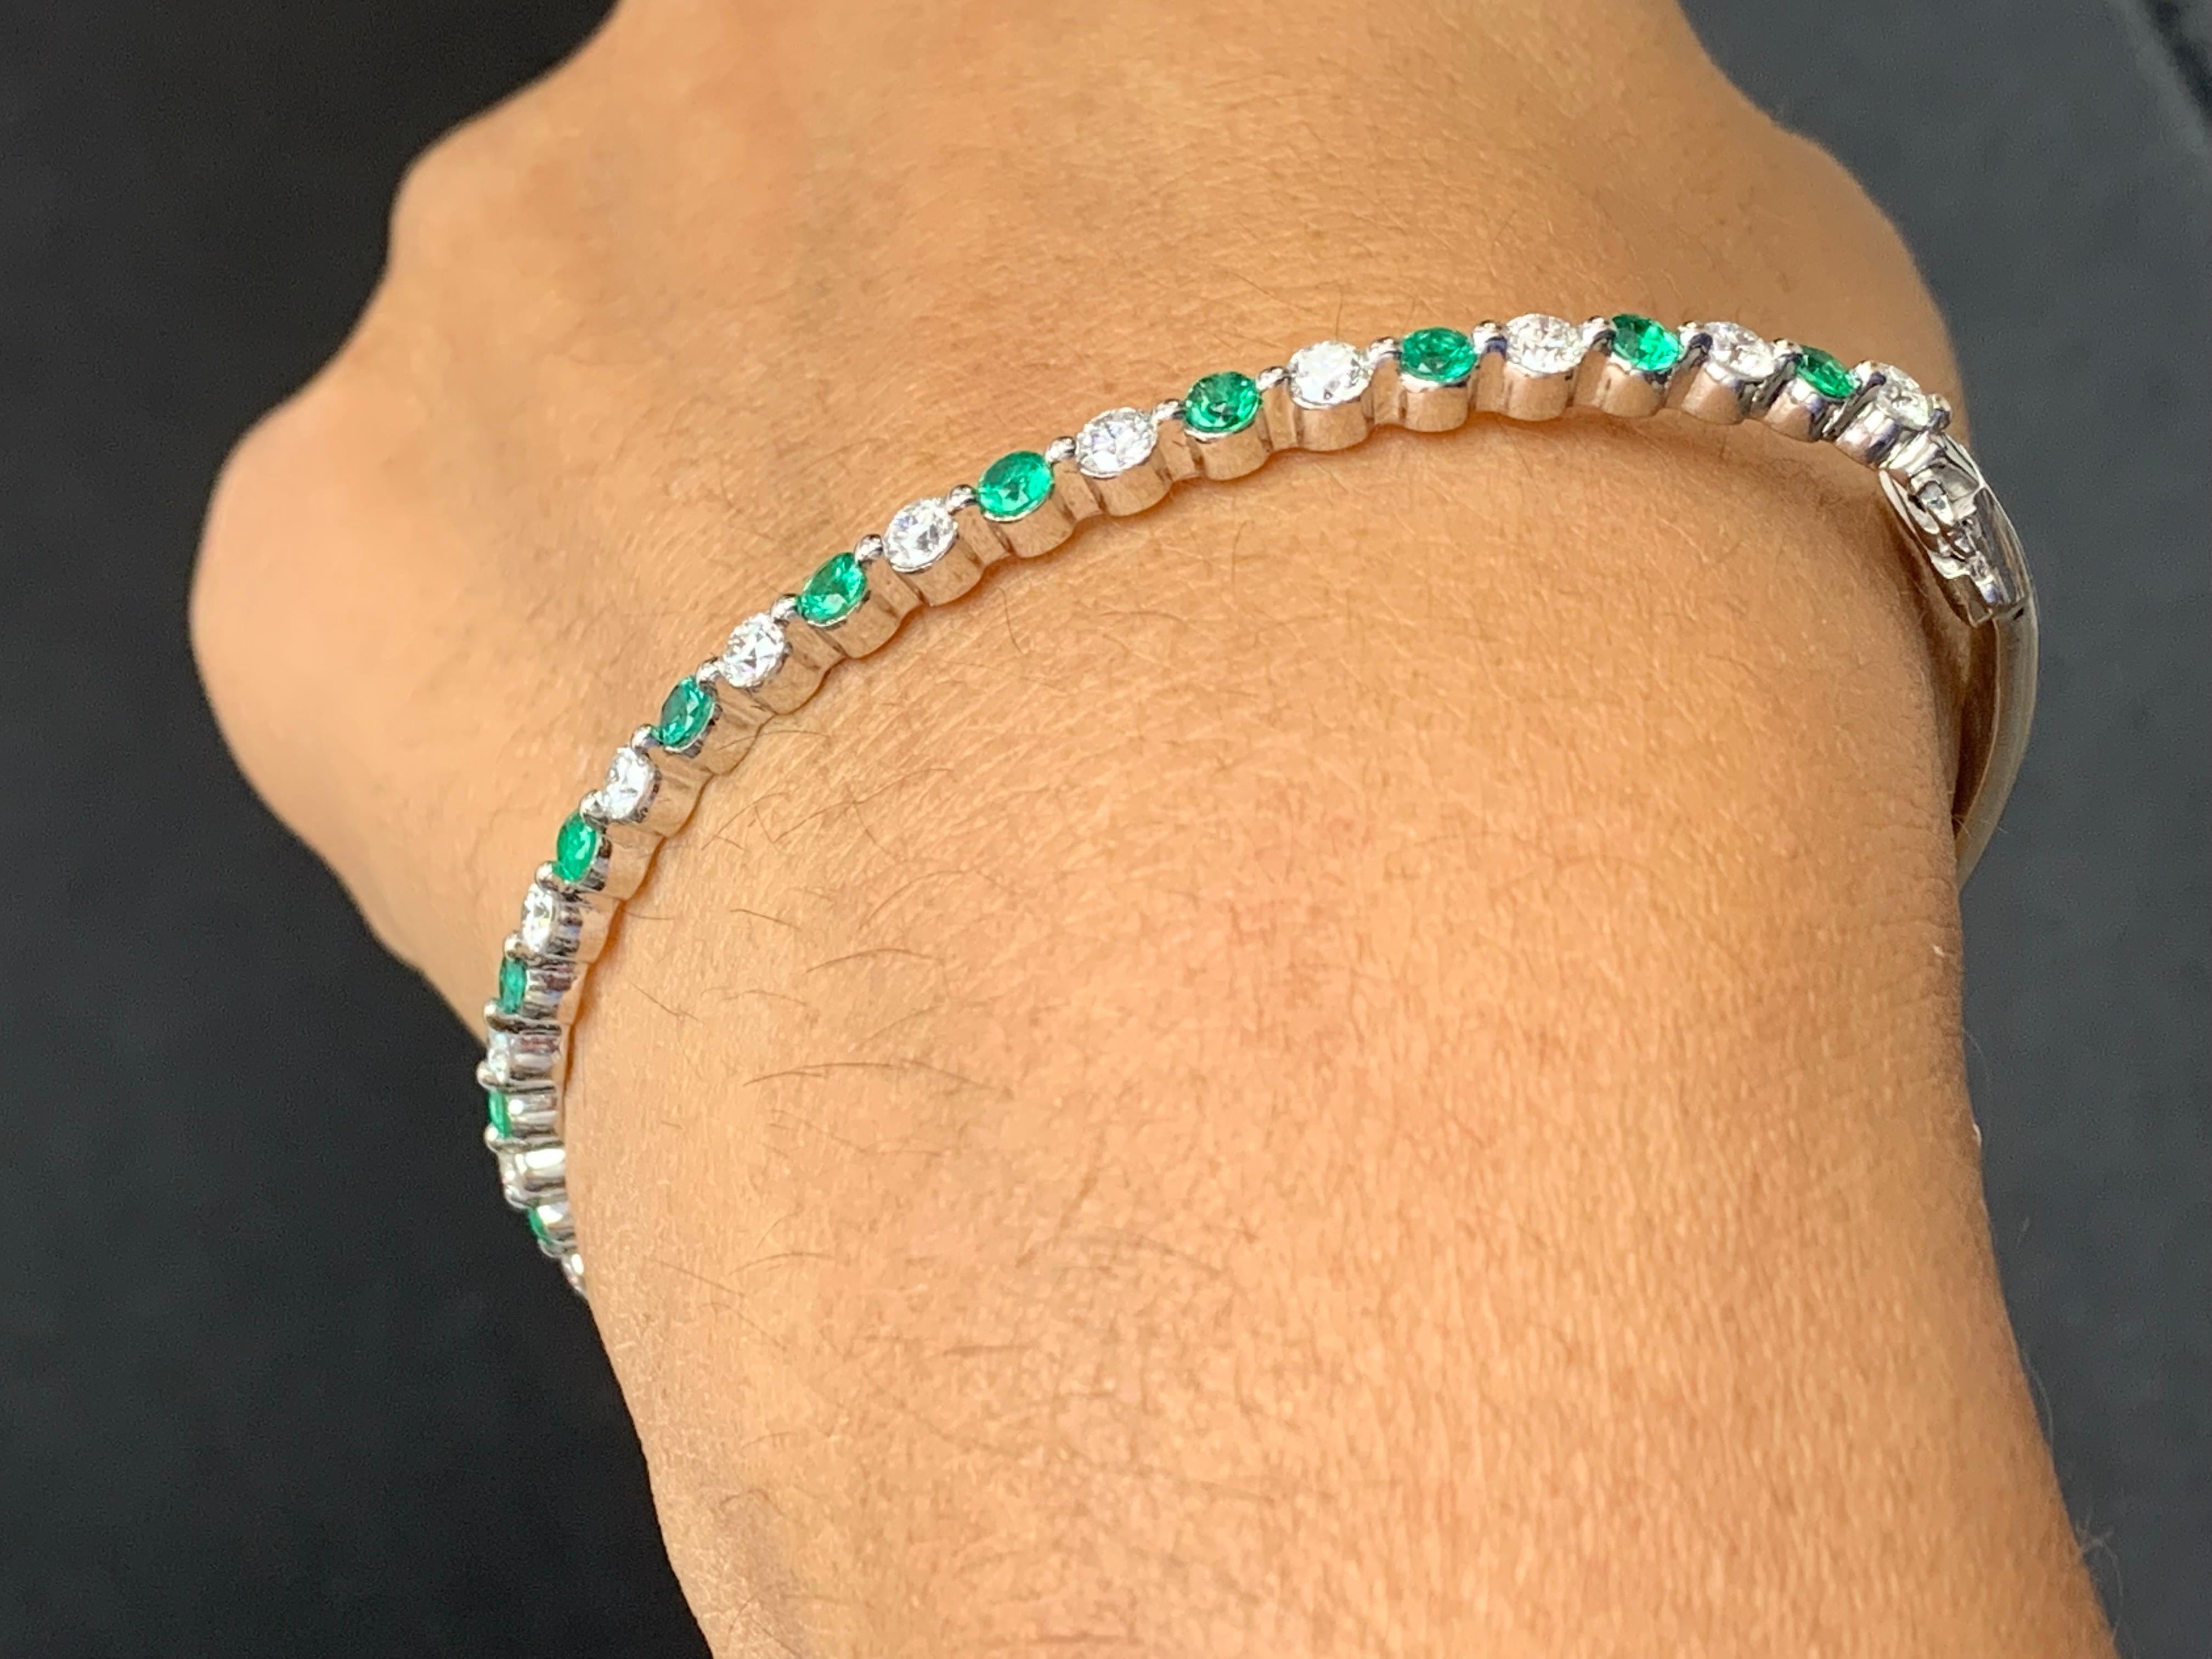 Brilliant Cut 2.33 Carat Emerald and Diamond Bangle Bracelet in 14 K White Gold For Sale